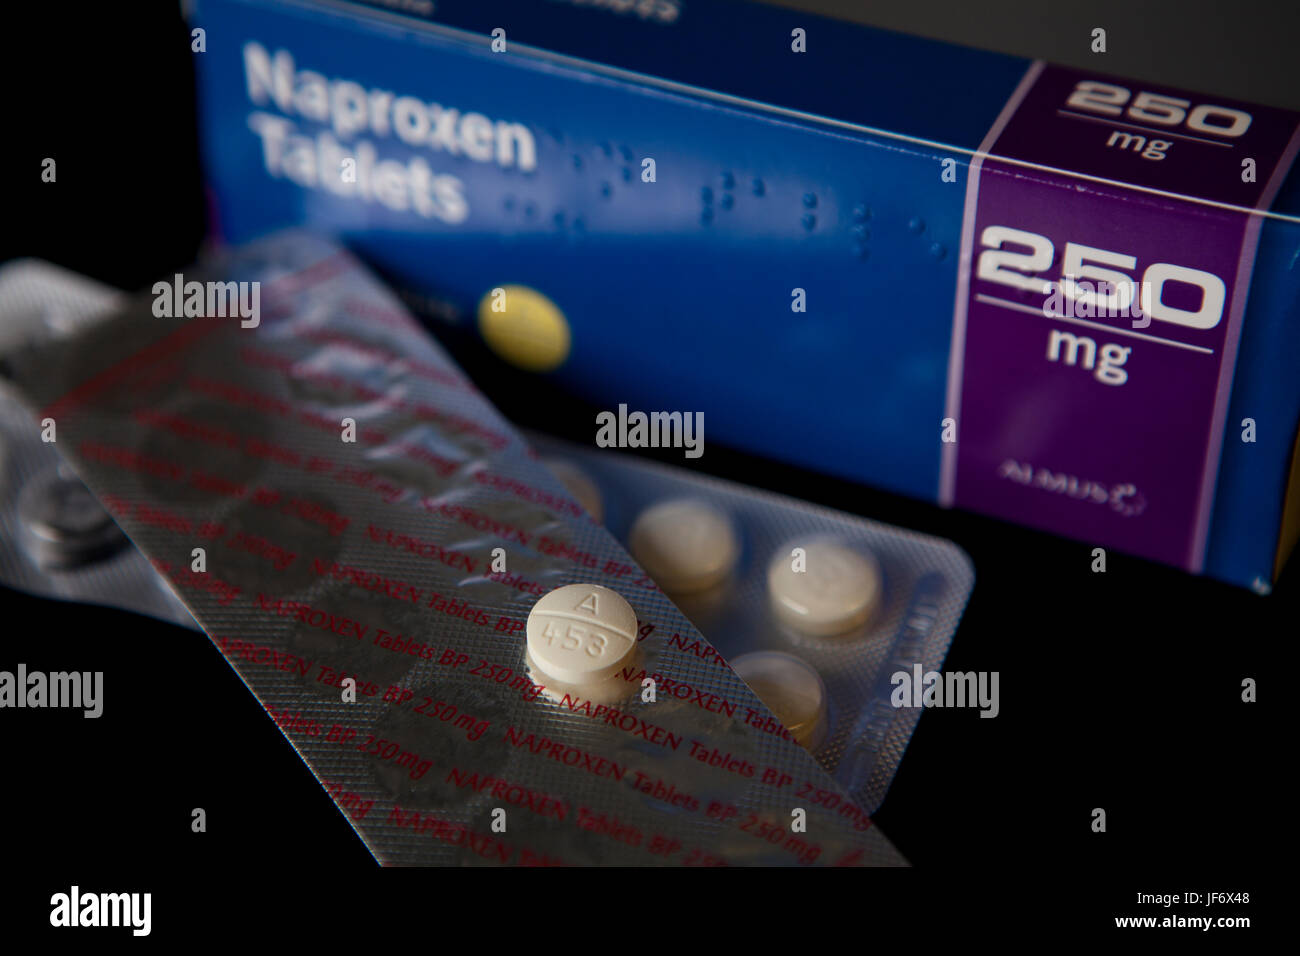 Naproxen 250mg tablets Stock Photo